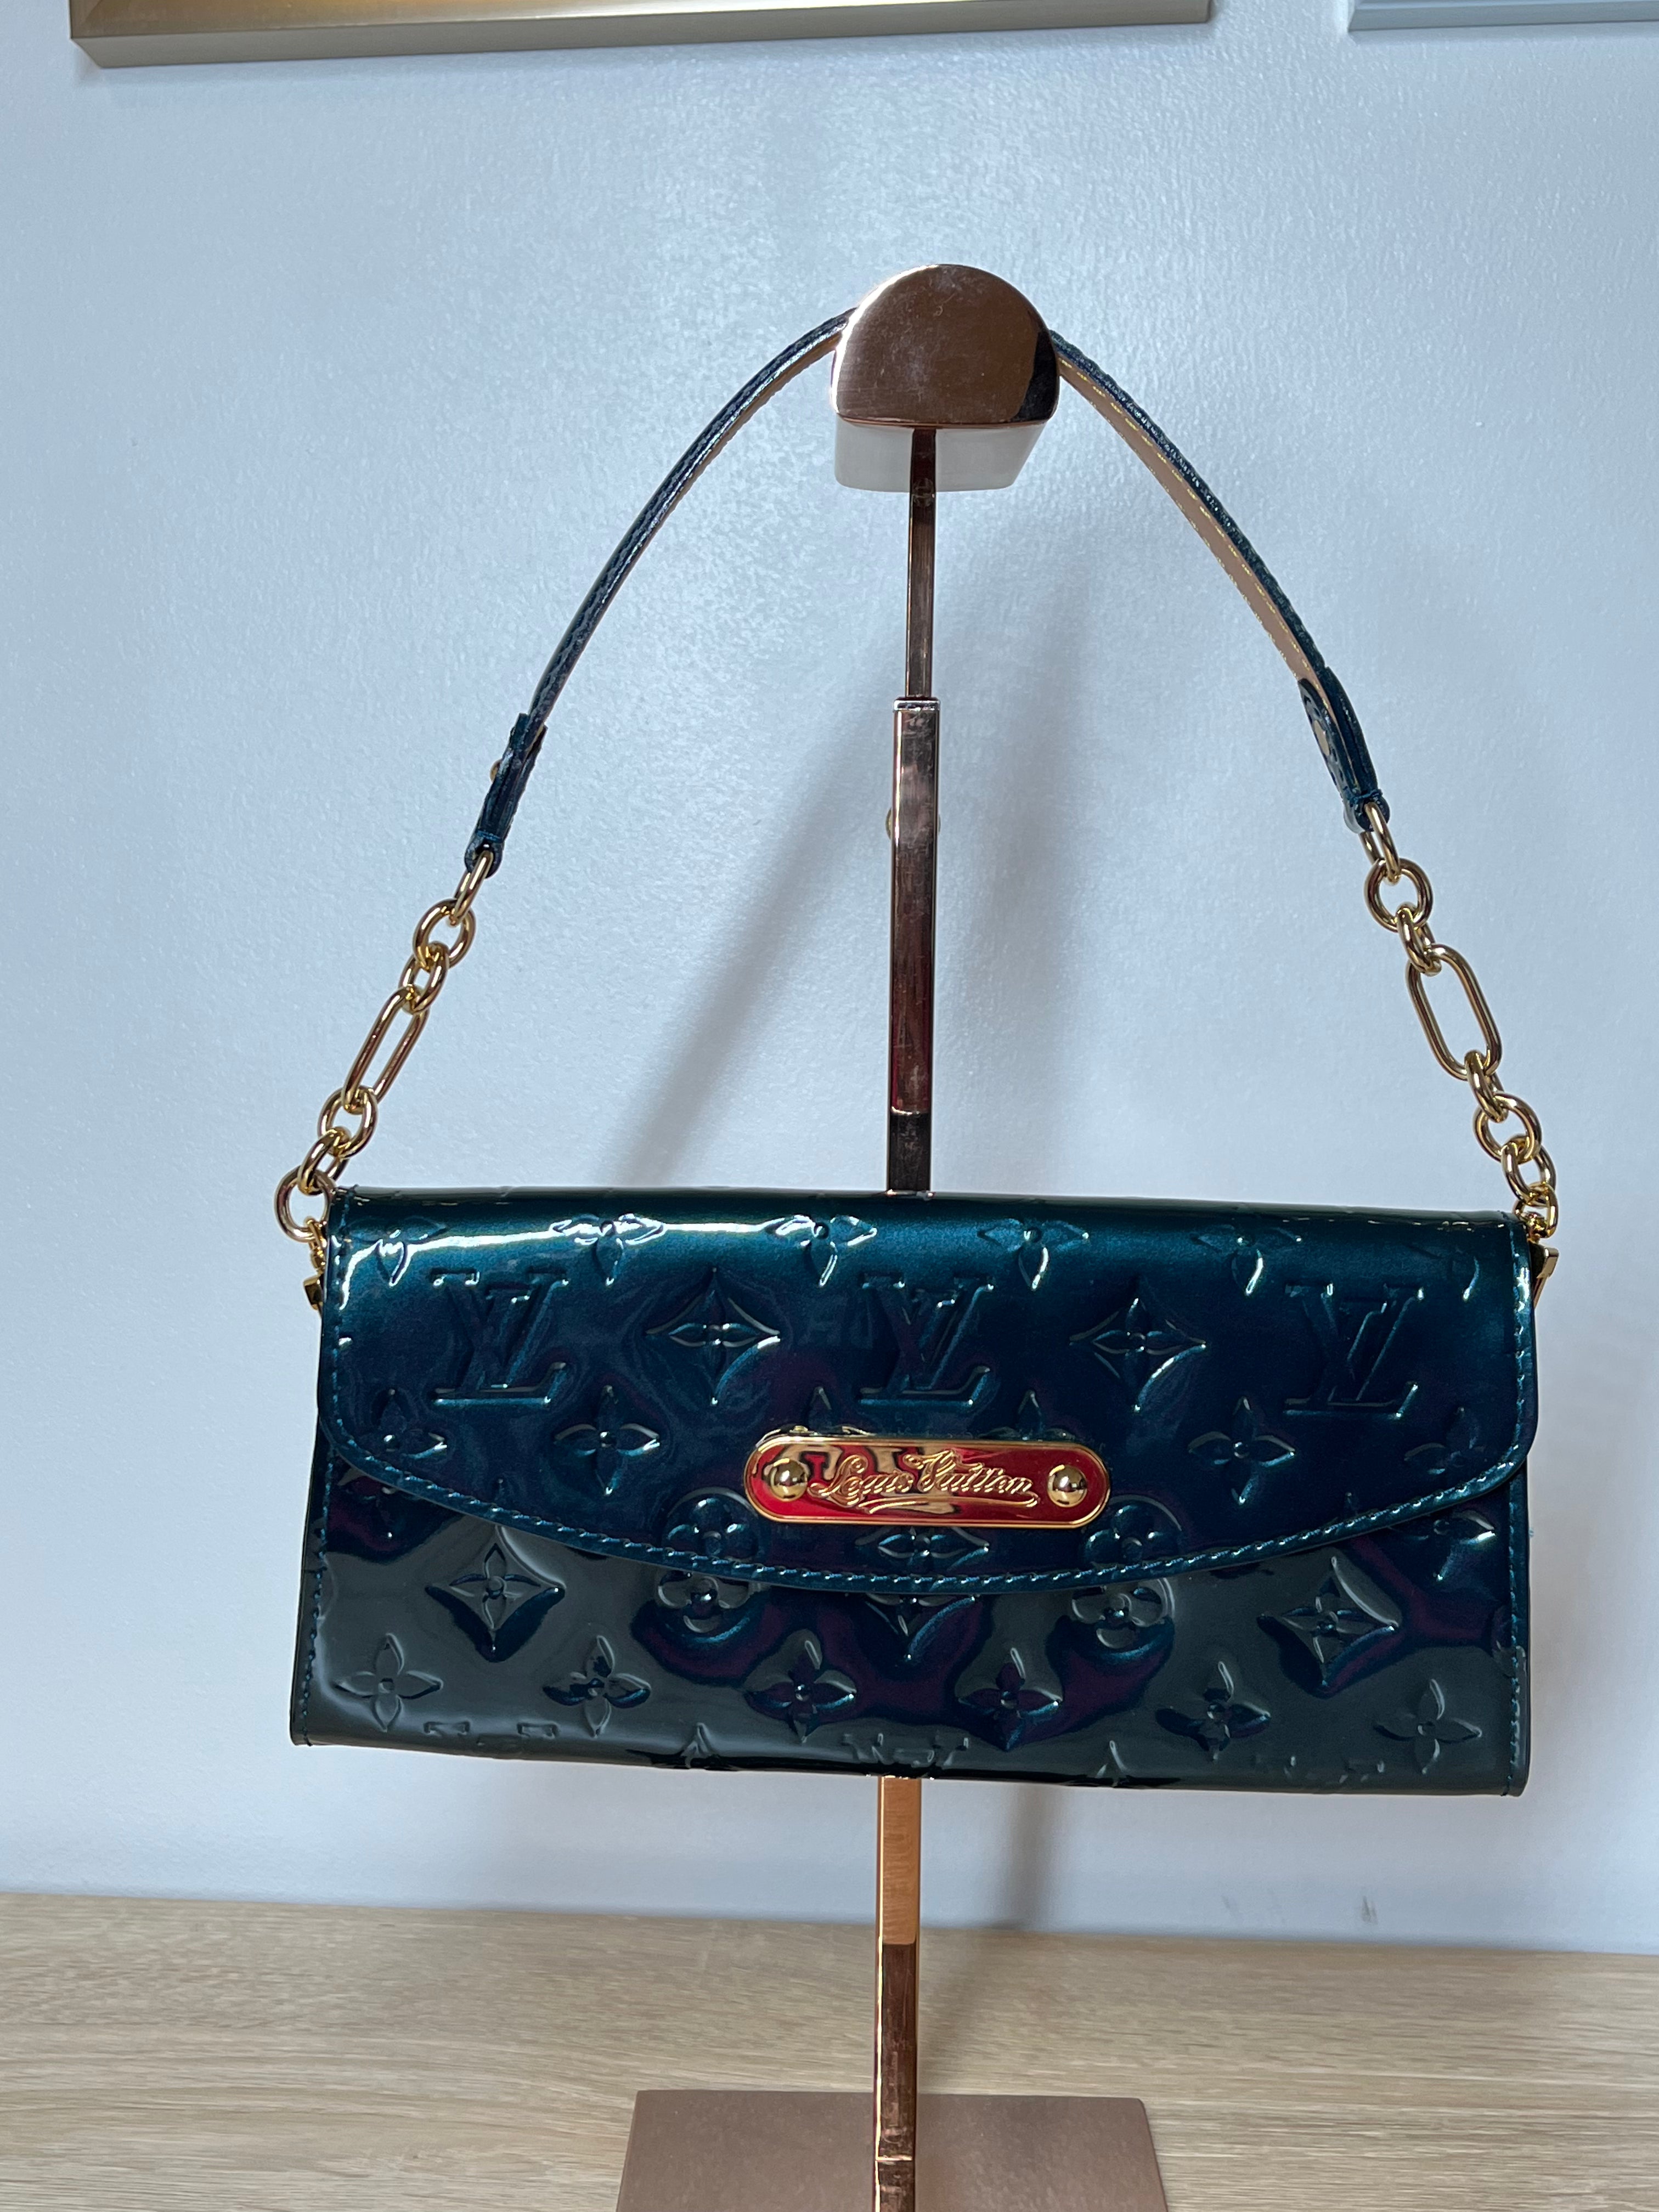 Sunset boulevard leather handbag Louis Vuitton Blue in Leather - 21920849